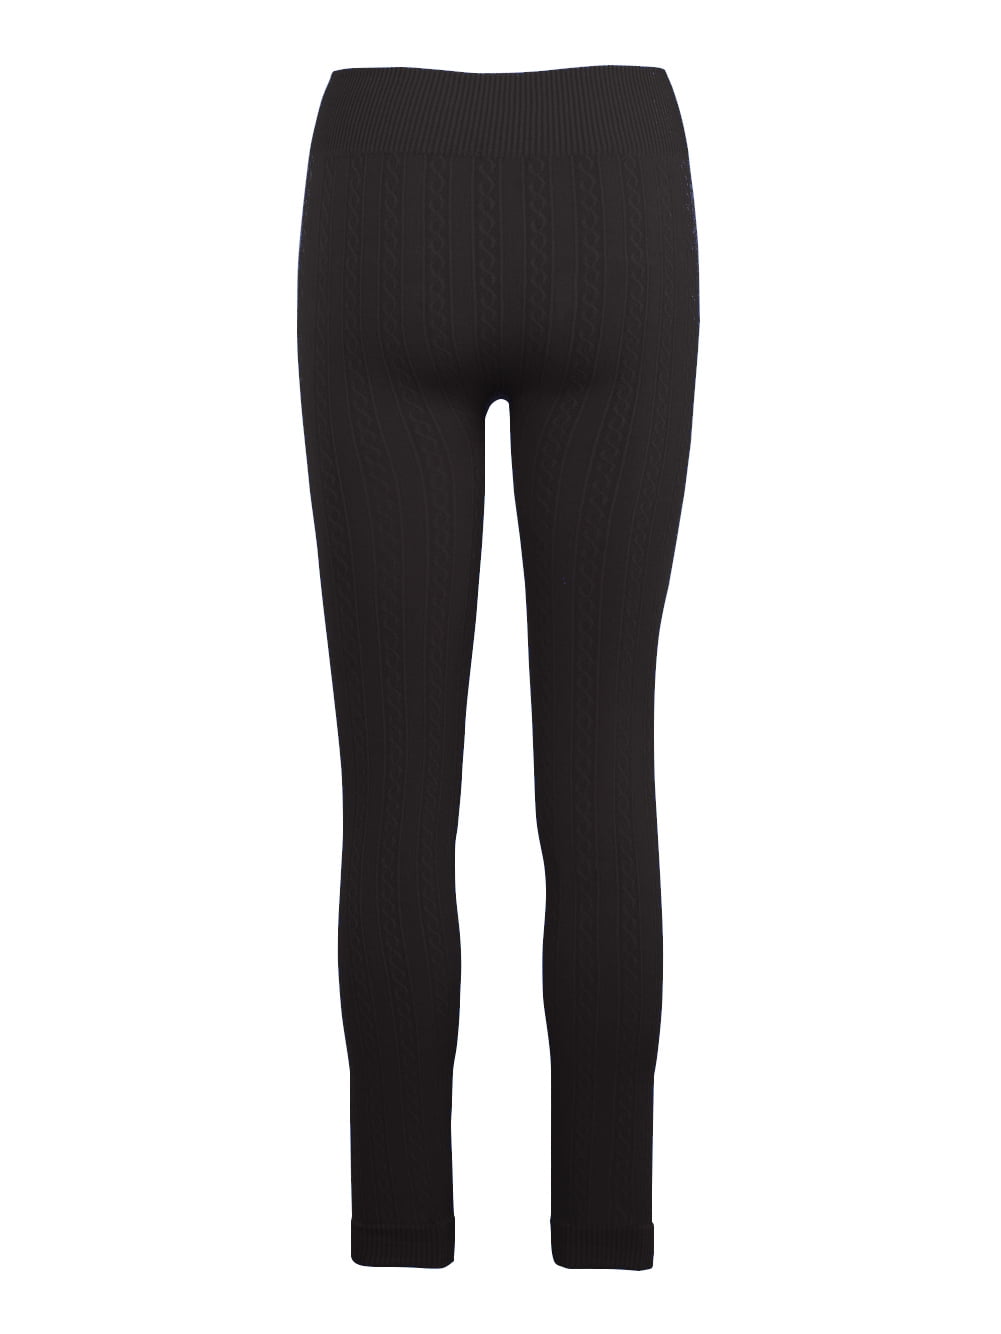 Emme Jordan Ladies 6 Pack Fleece Lined Cable Legging, Women Ultra Soft  Stretch Regular and Plus Size, Black/Black, Large-X-Large: Buy Online at  Best Price in UAE 